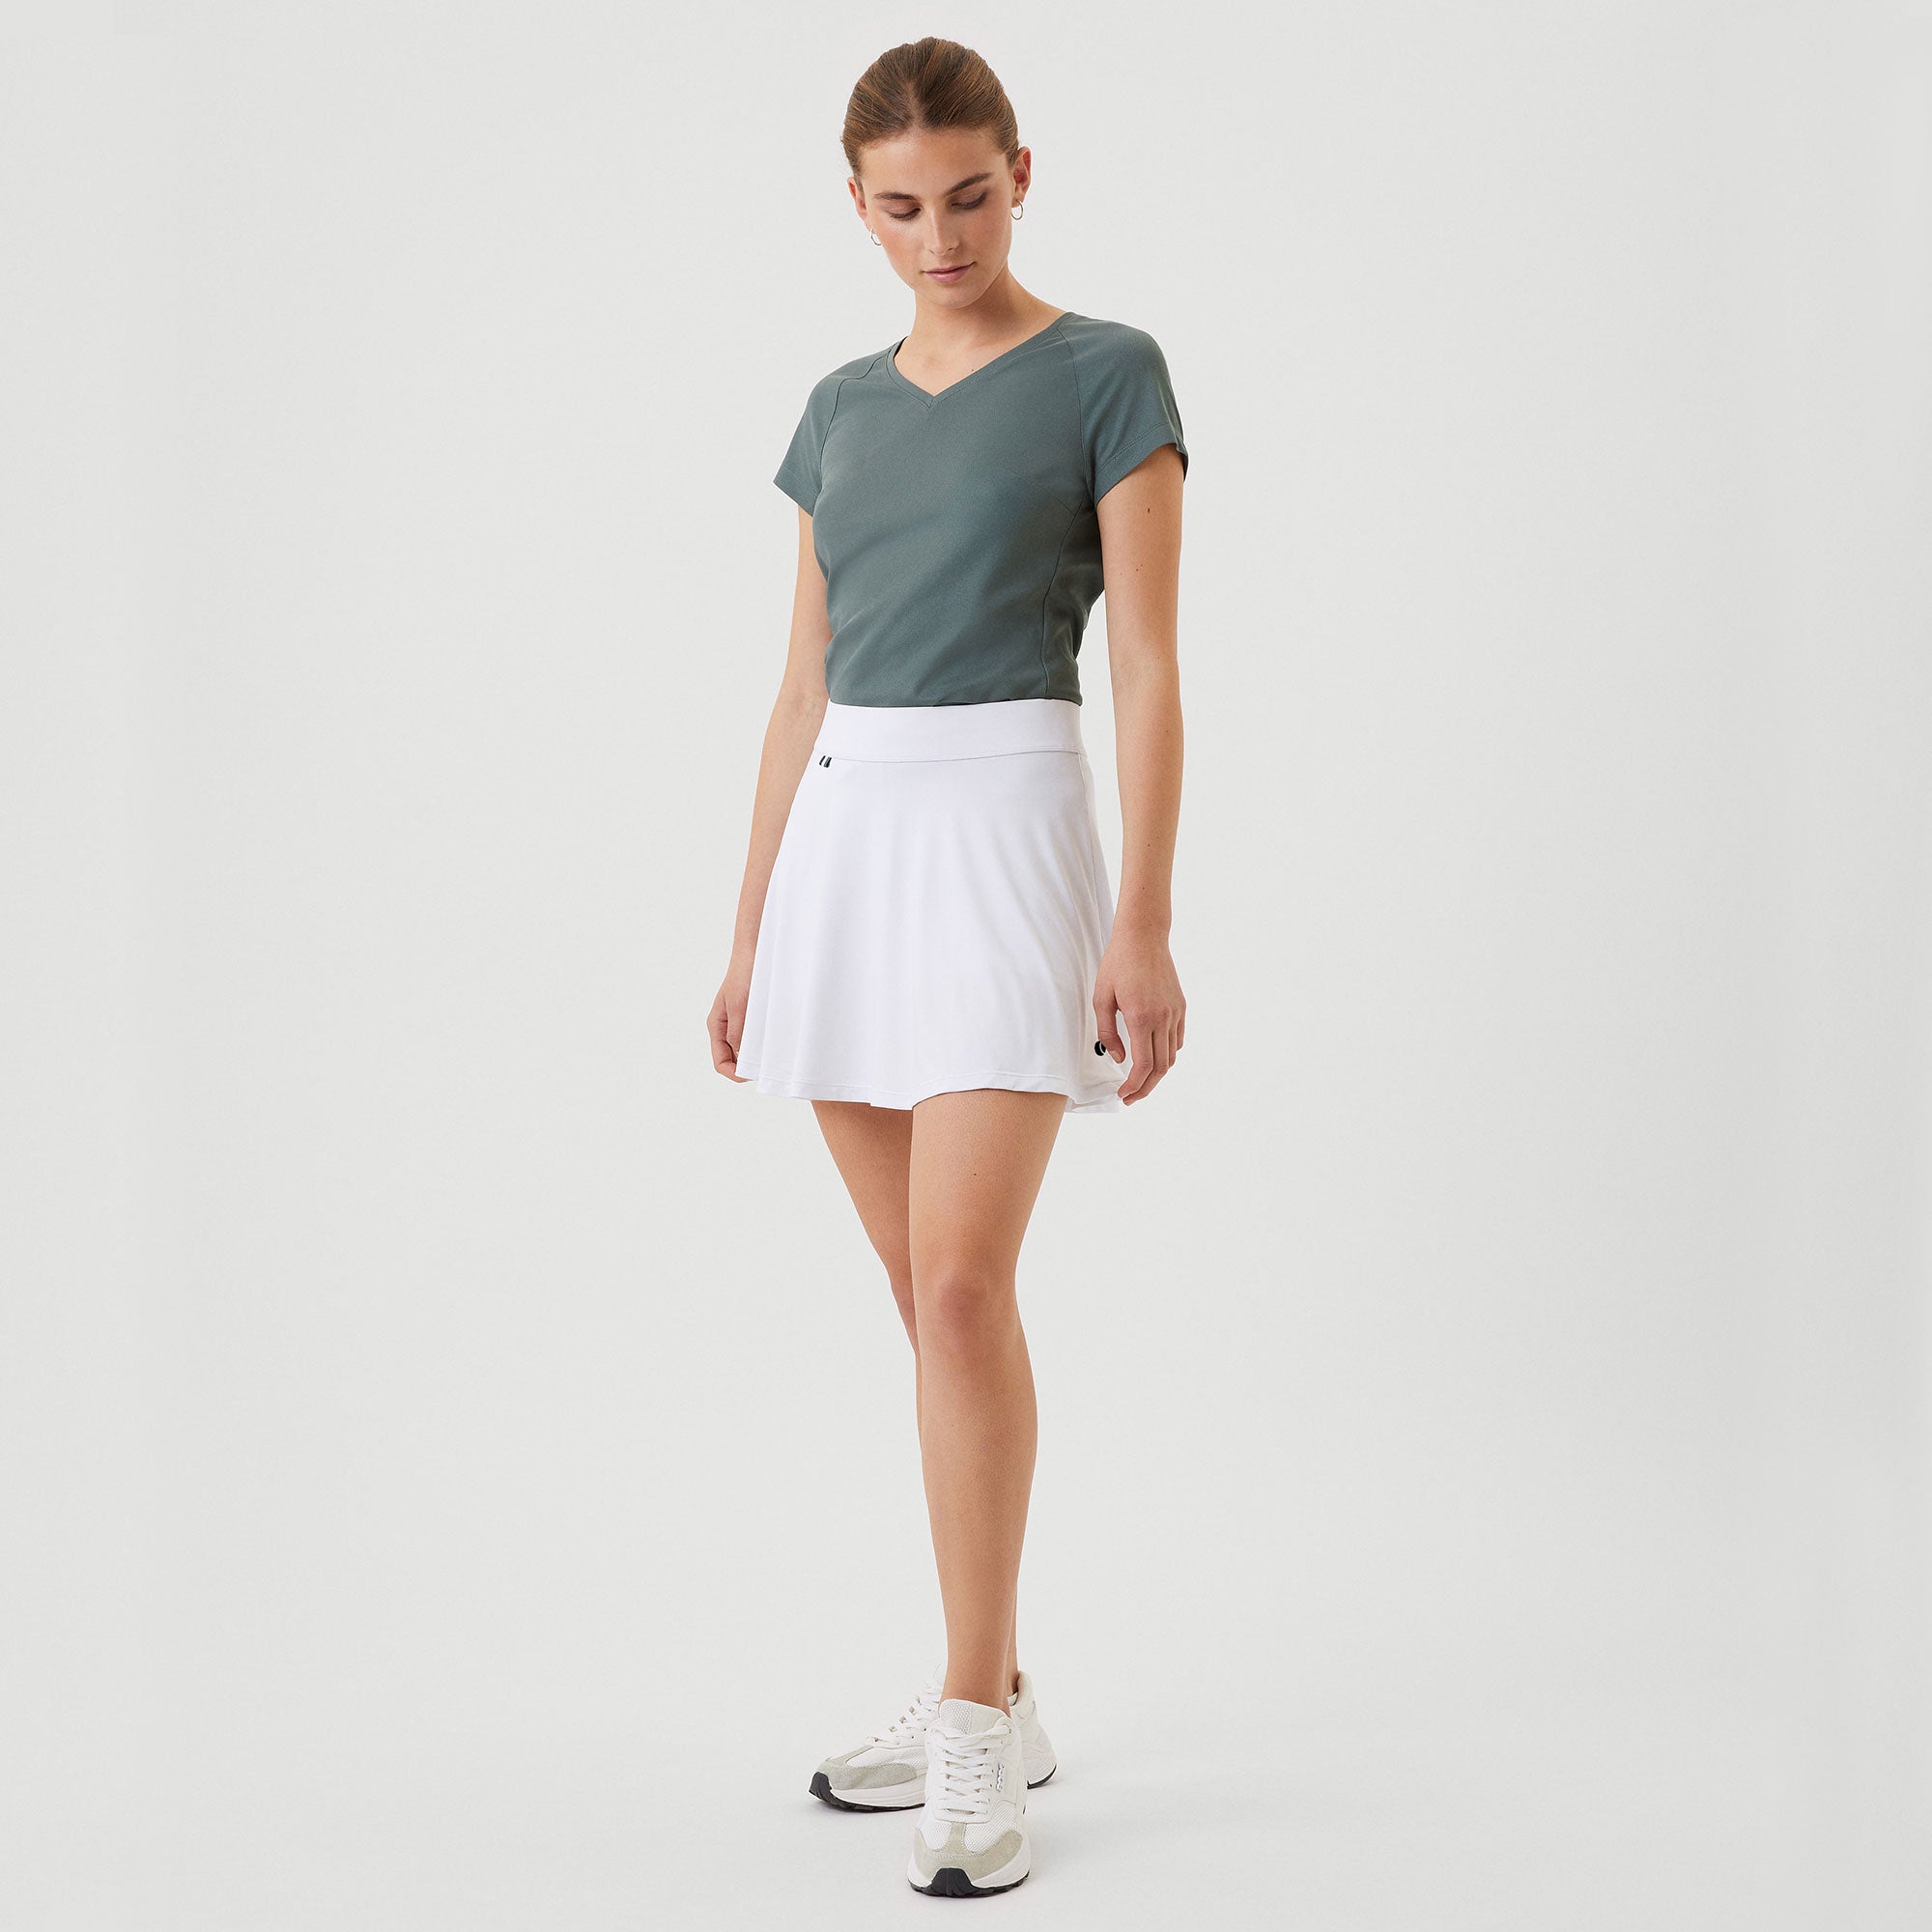 Björn Borg Ace Women's Jersey Tennis Skirt - White (3)